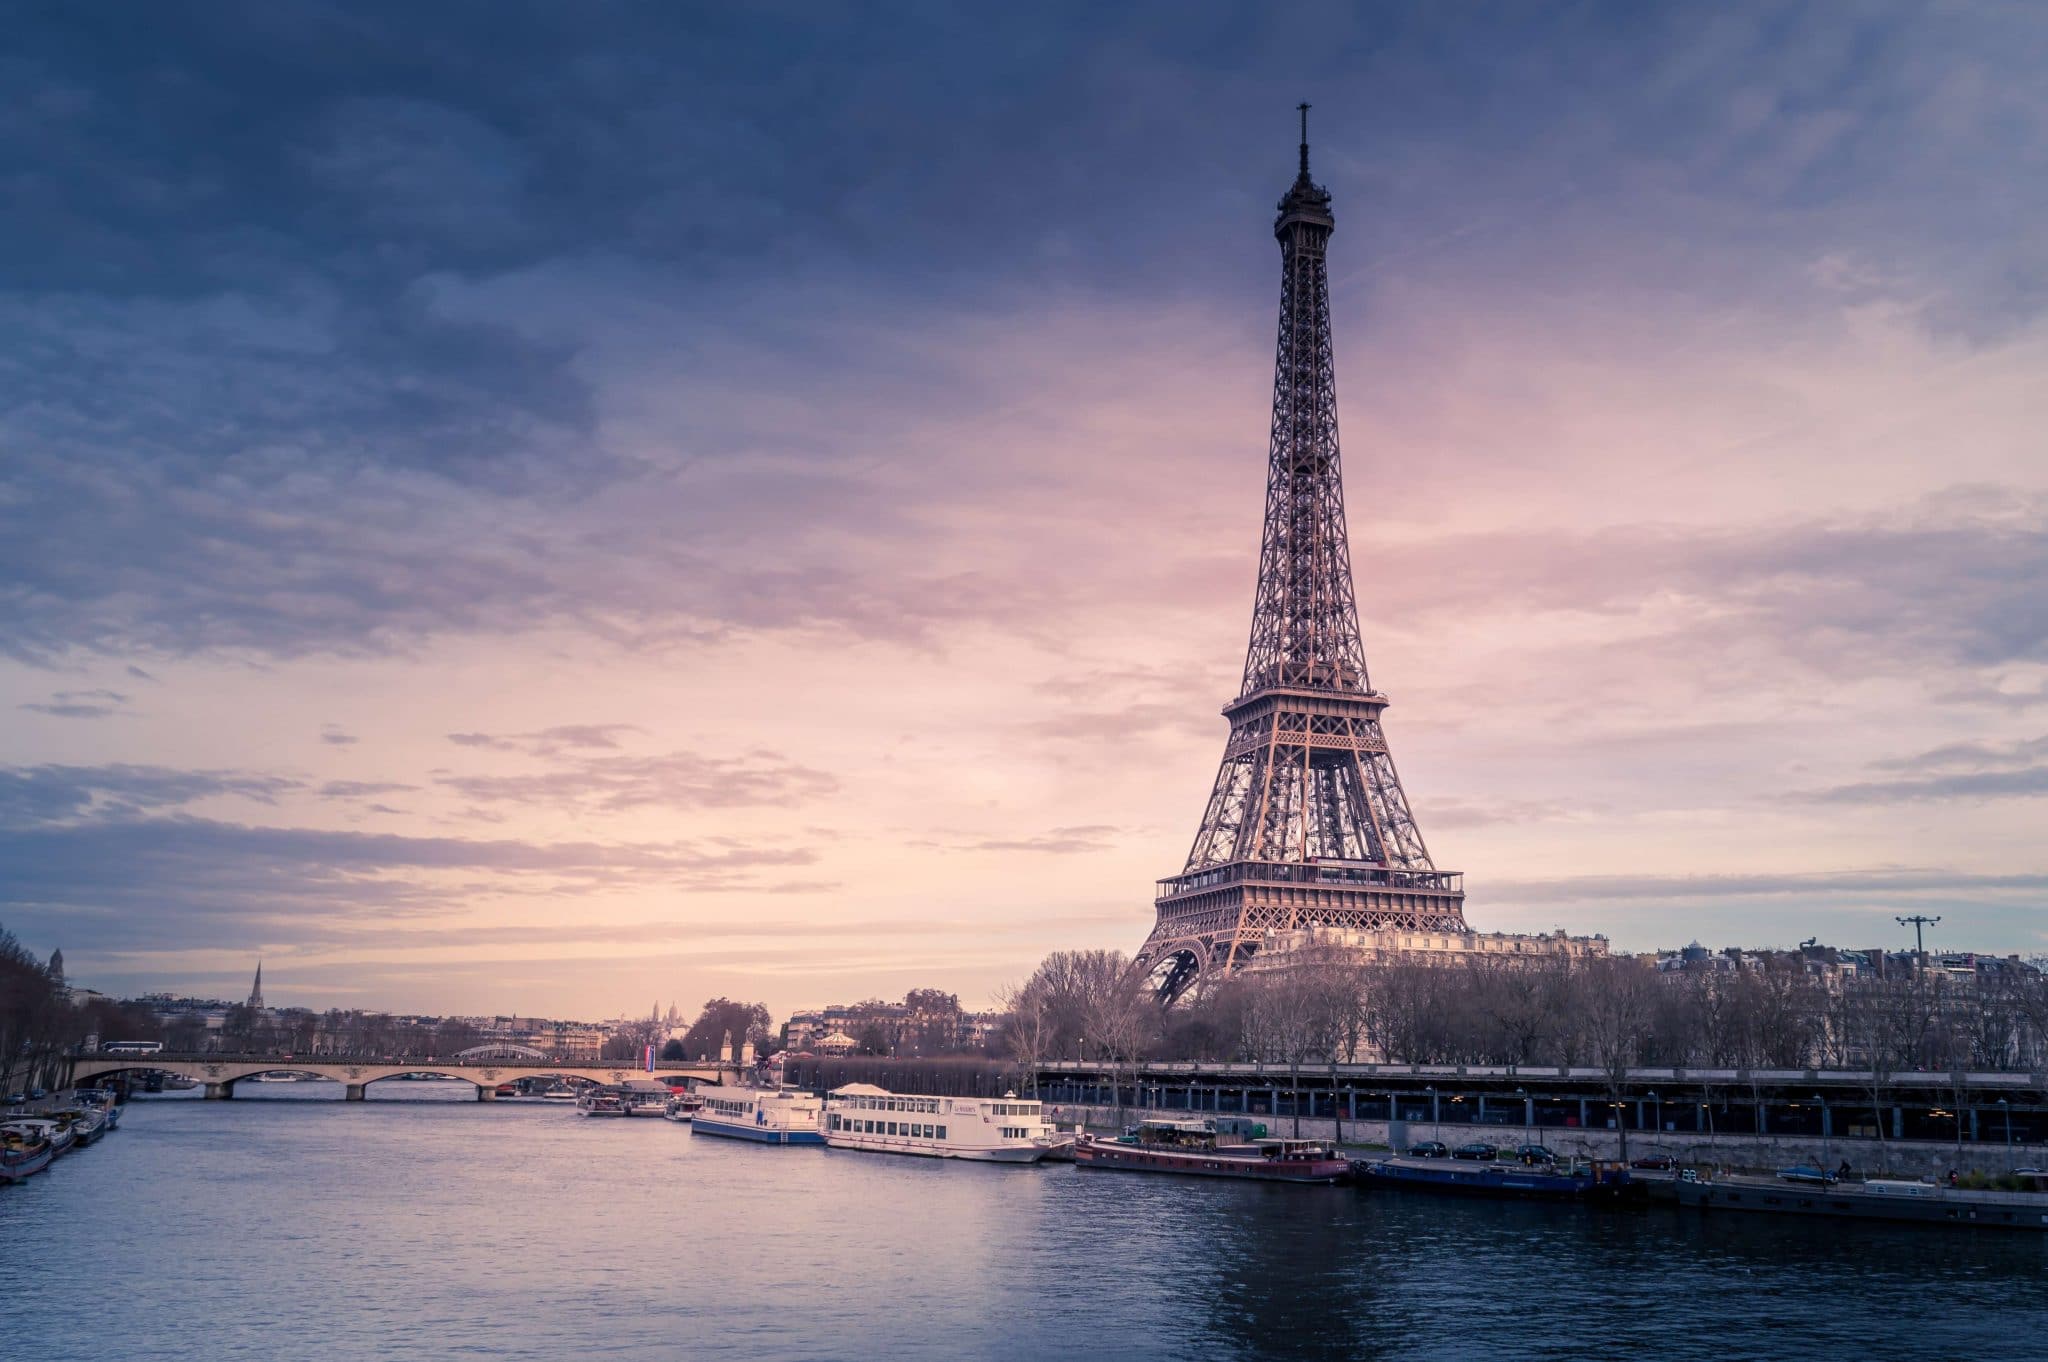 Paris Eiffel Tower over the river